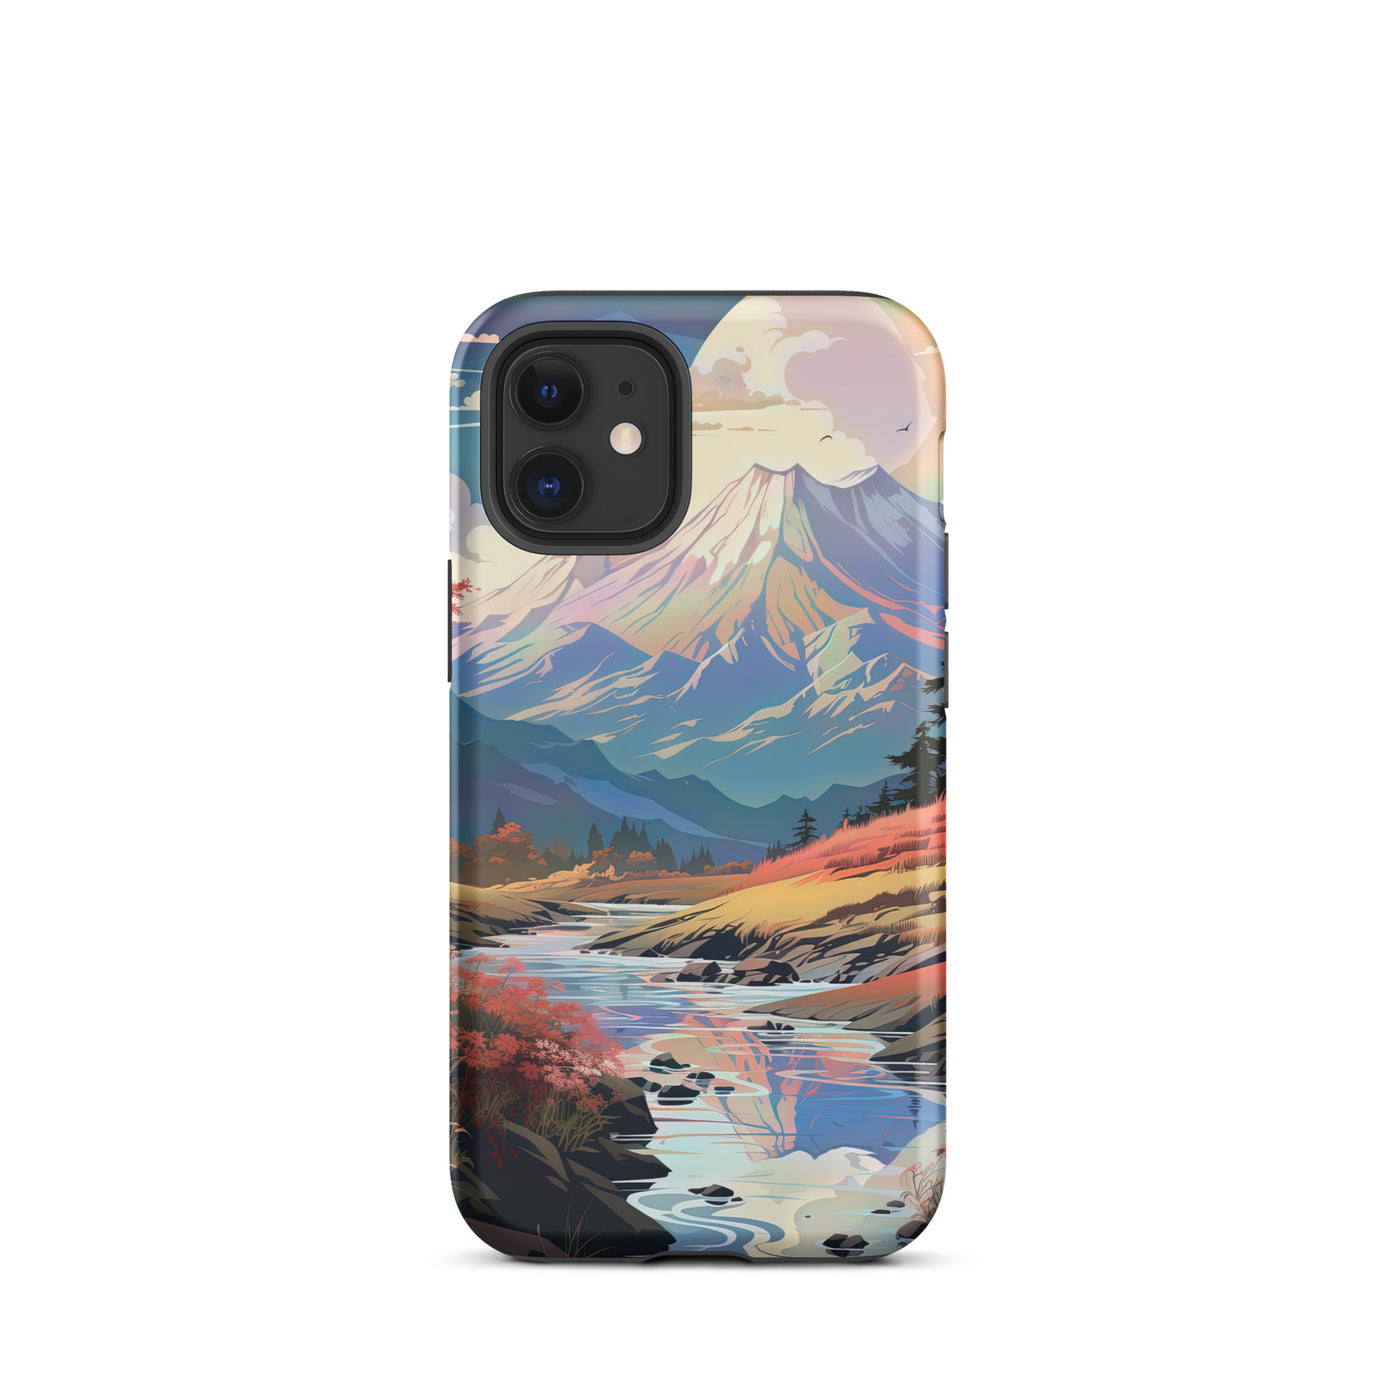 Berge. Fluss und Blumen - Malerei - iPhone Schutzhülle (robust) berge xxx iPhone 12 mini